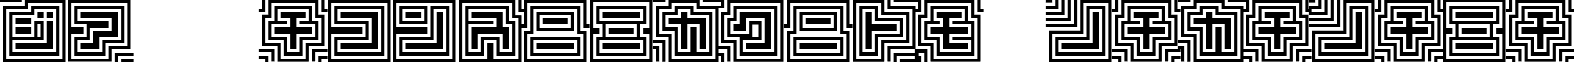 D3 Labyrinthism katakana D3Labyrinthismkatakana.ttf